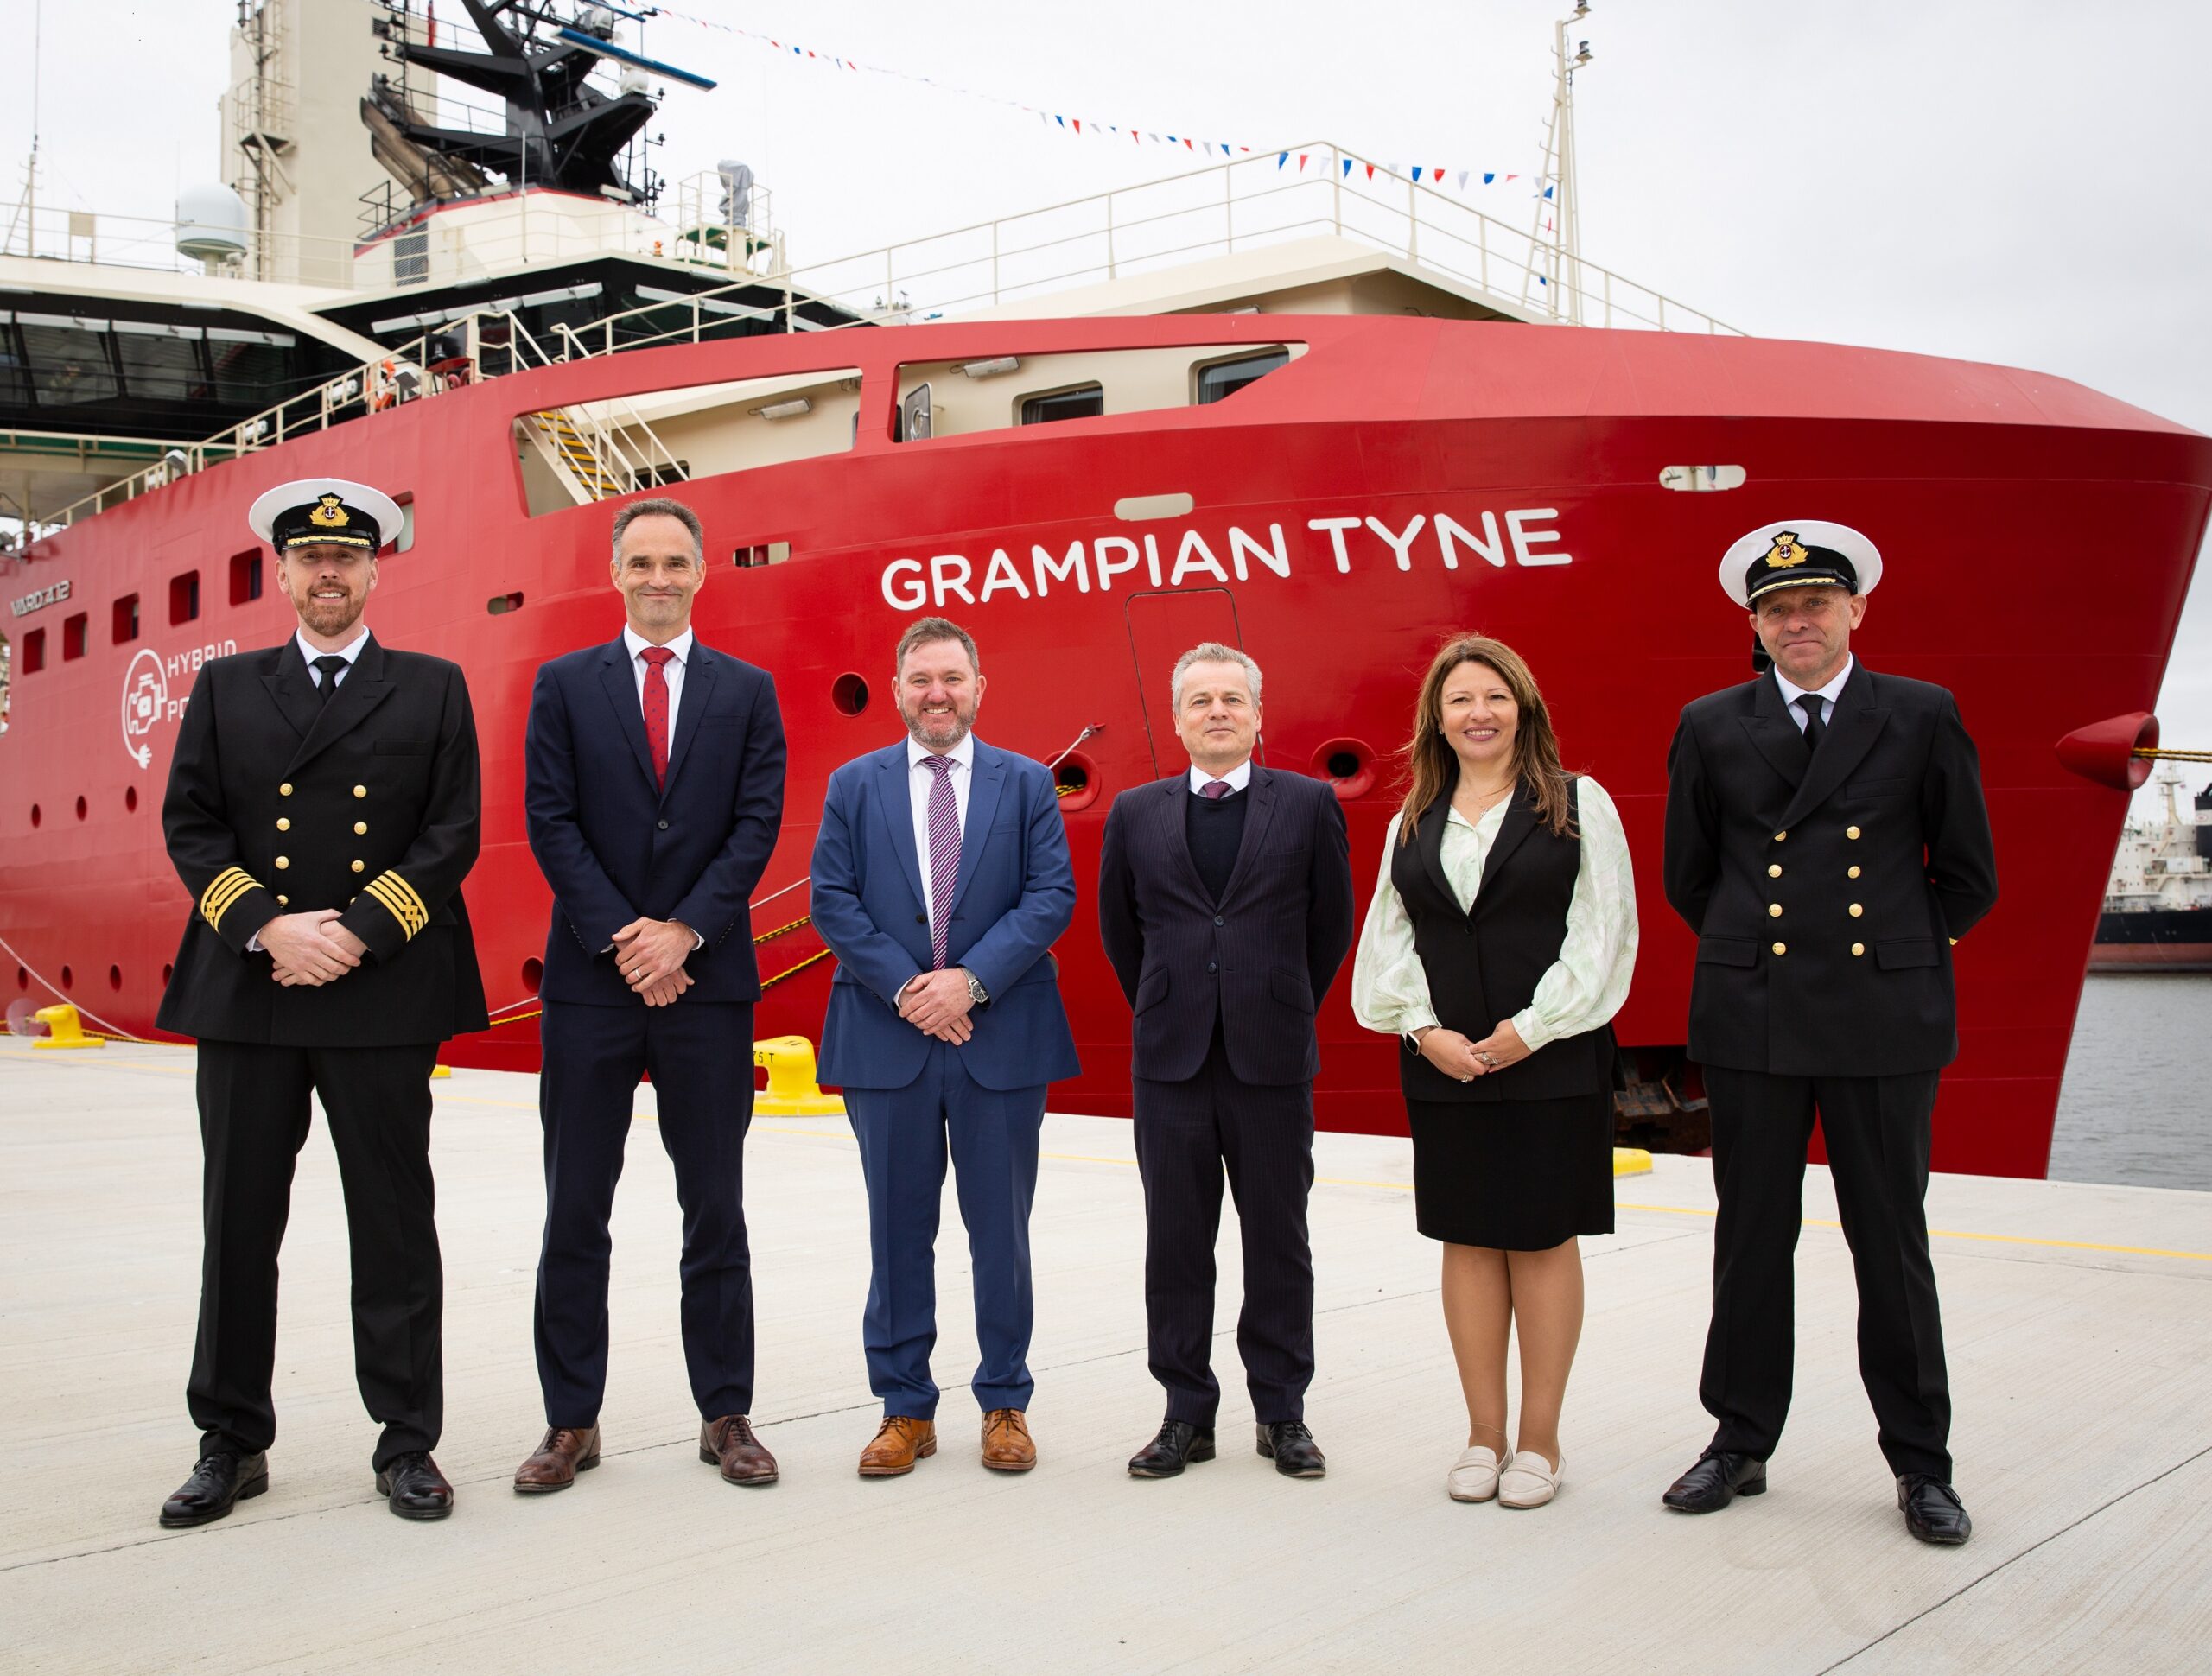 North Star - Grampian Tyne naming ceremony